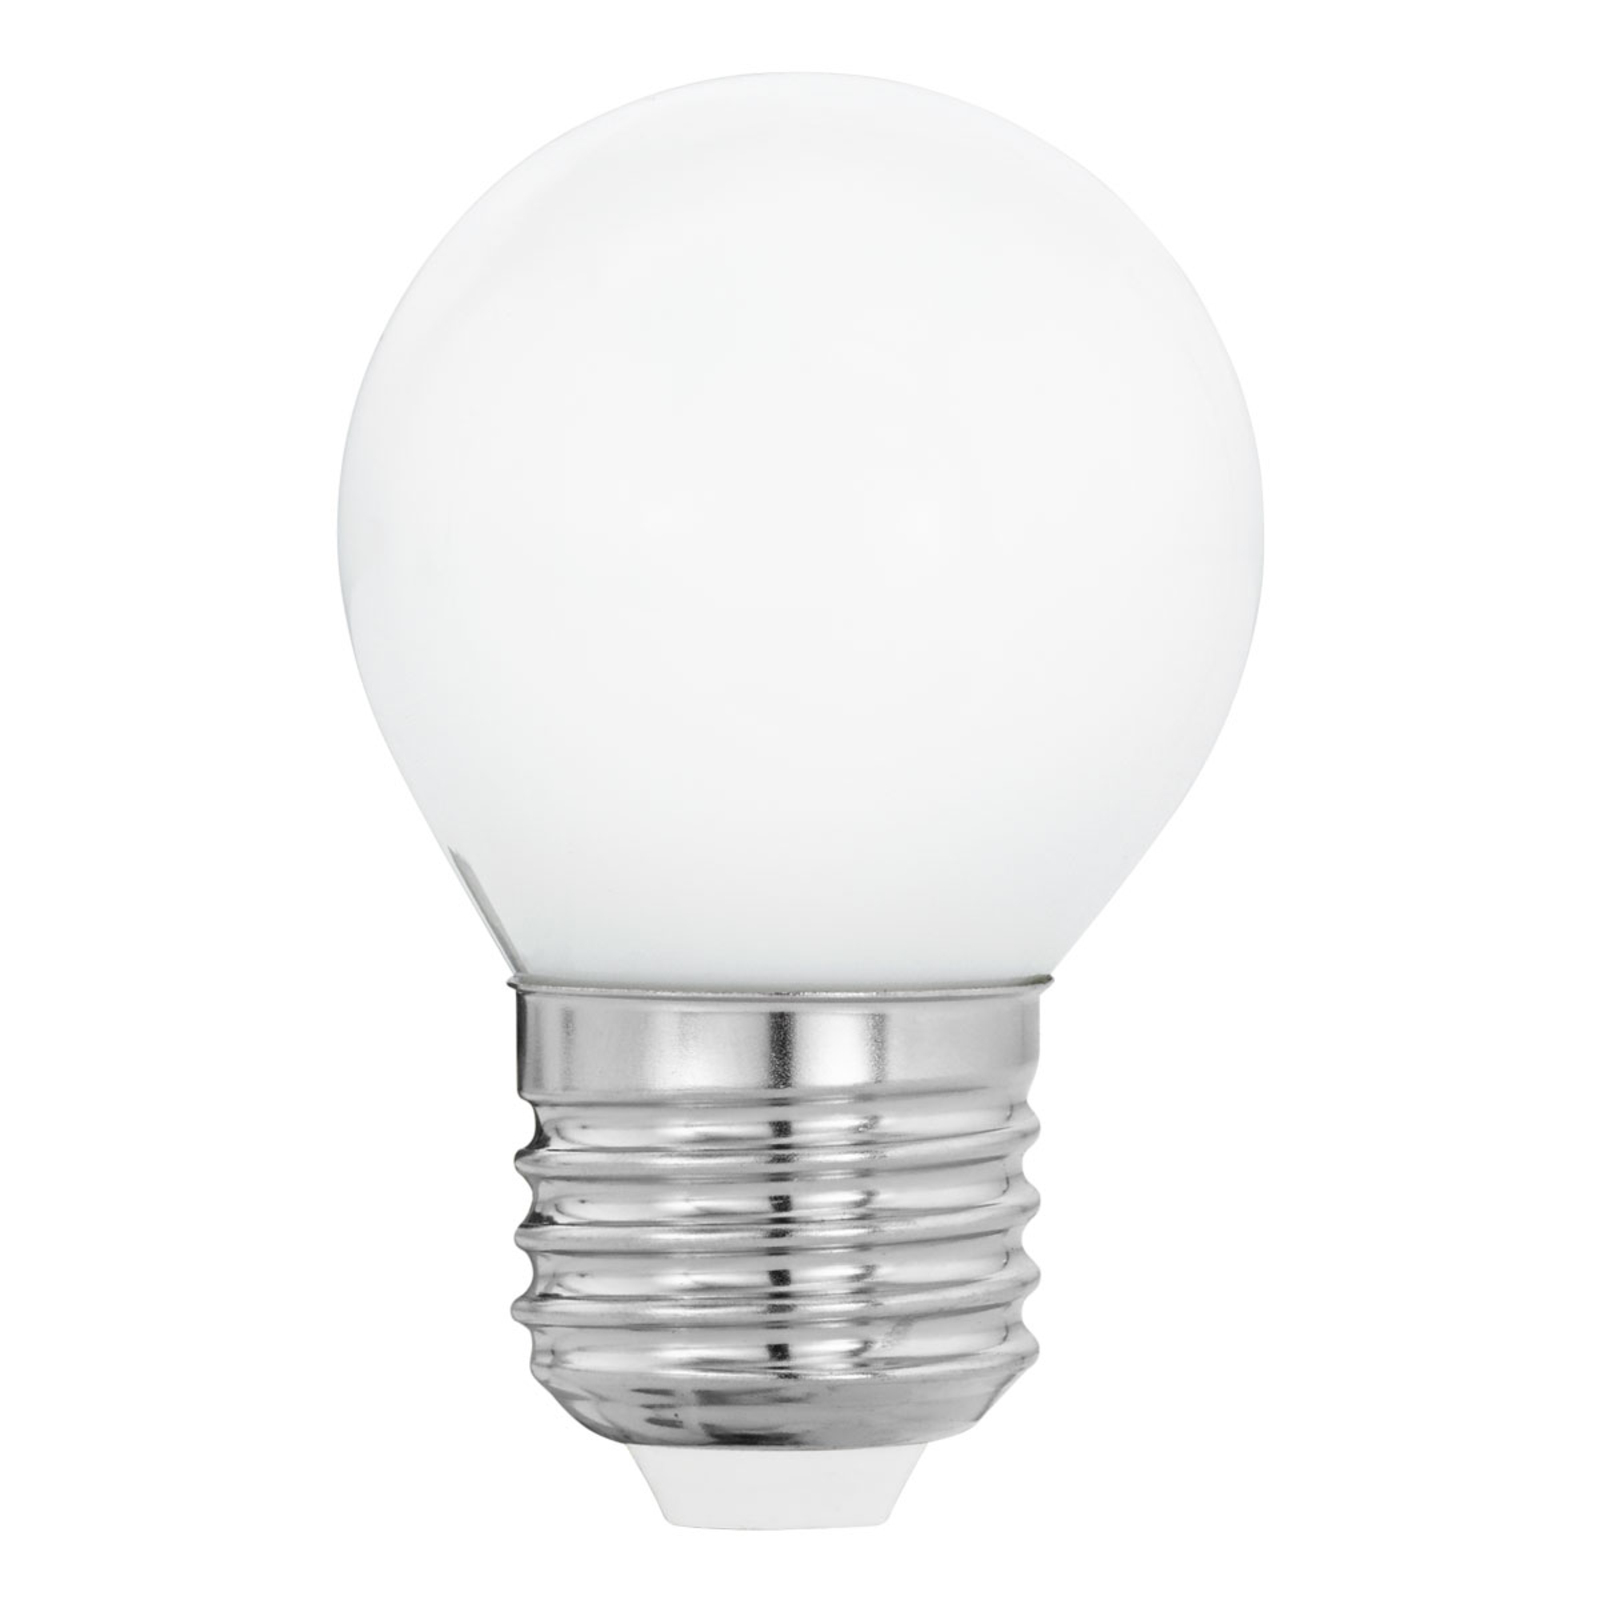 LED lamp E27 G45 opaal | Lampen24.be